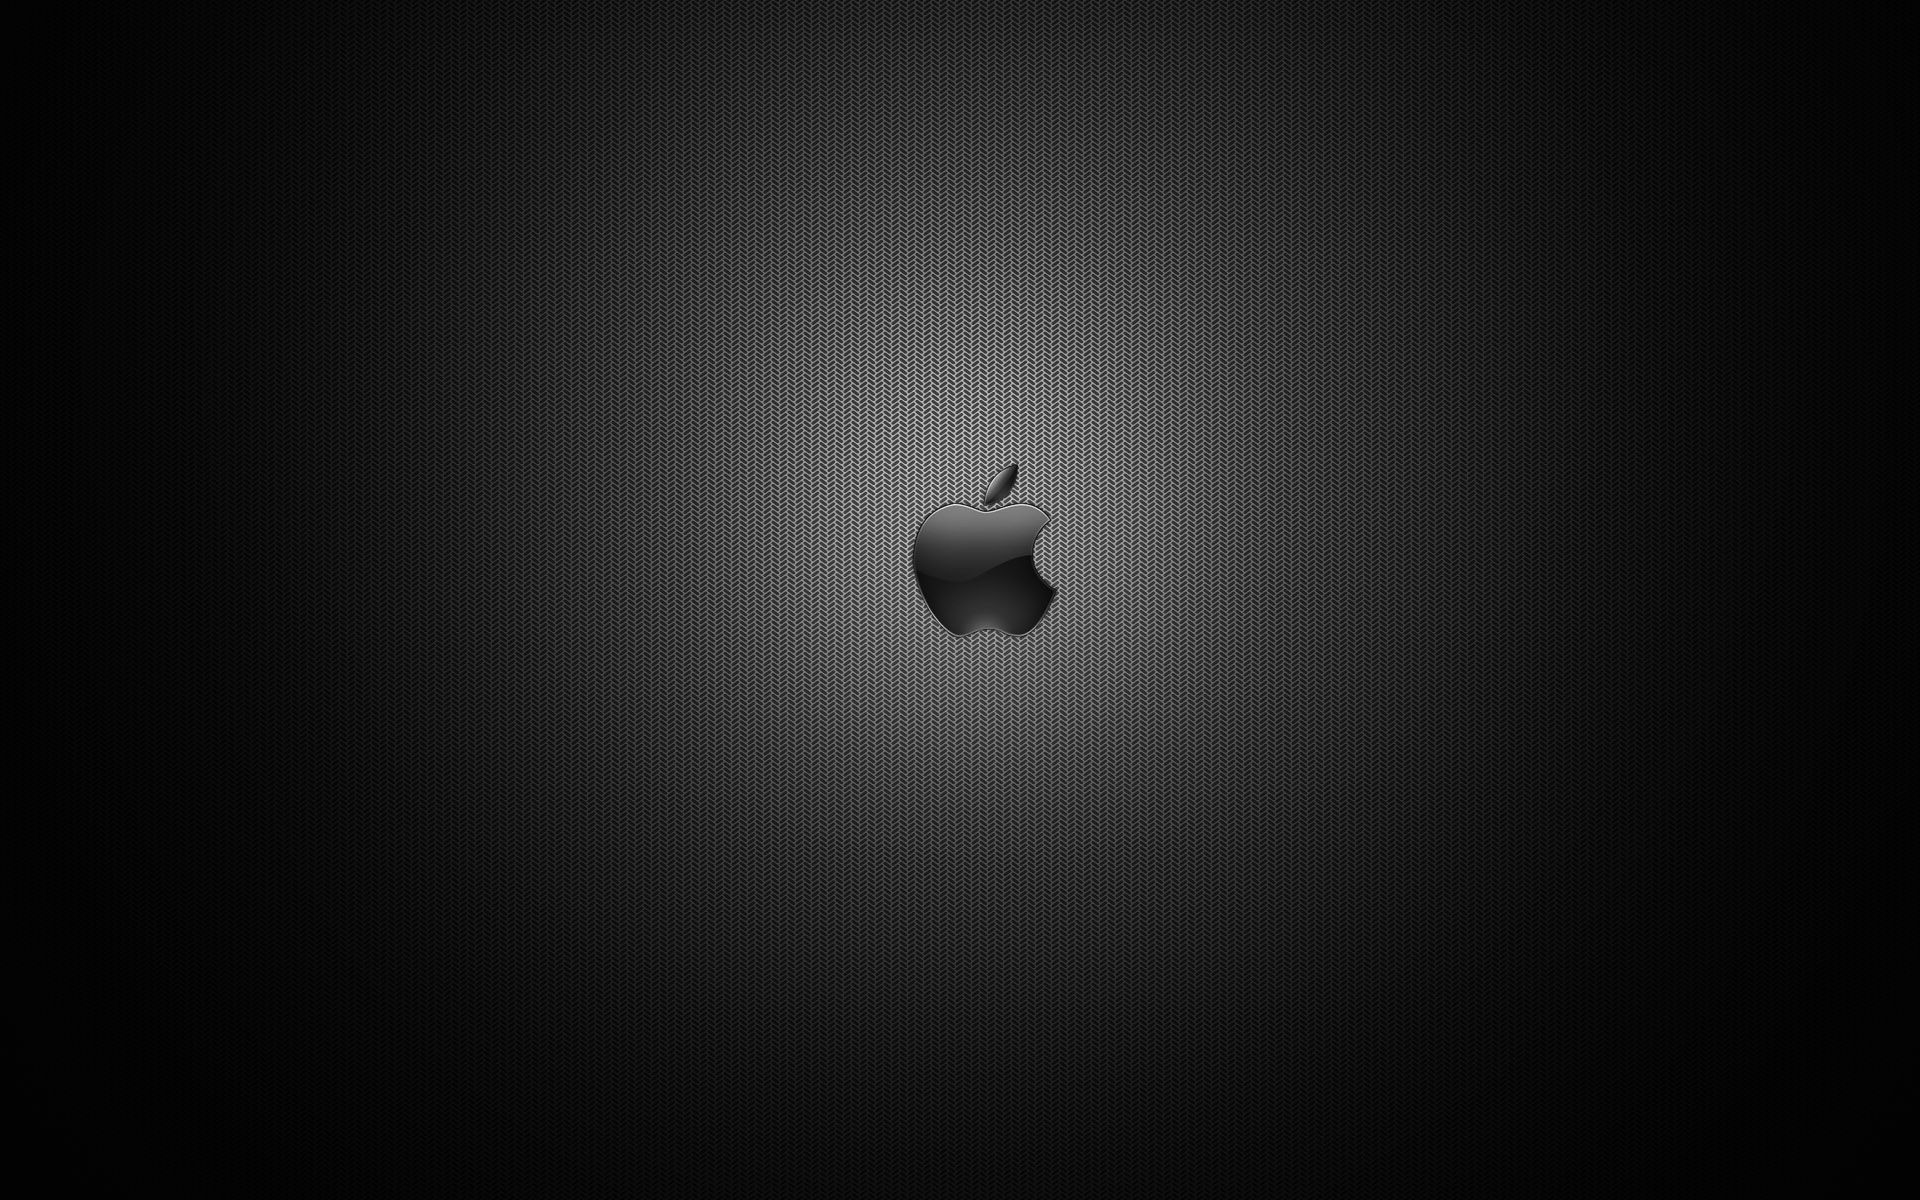 Dark Apple Logo Wallpapers | HD Wallpapers